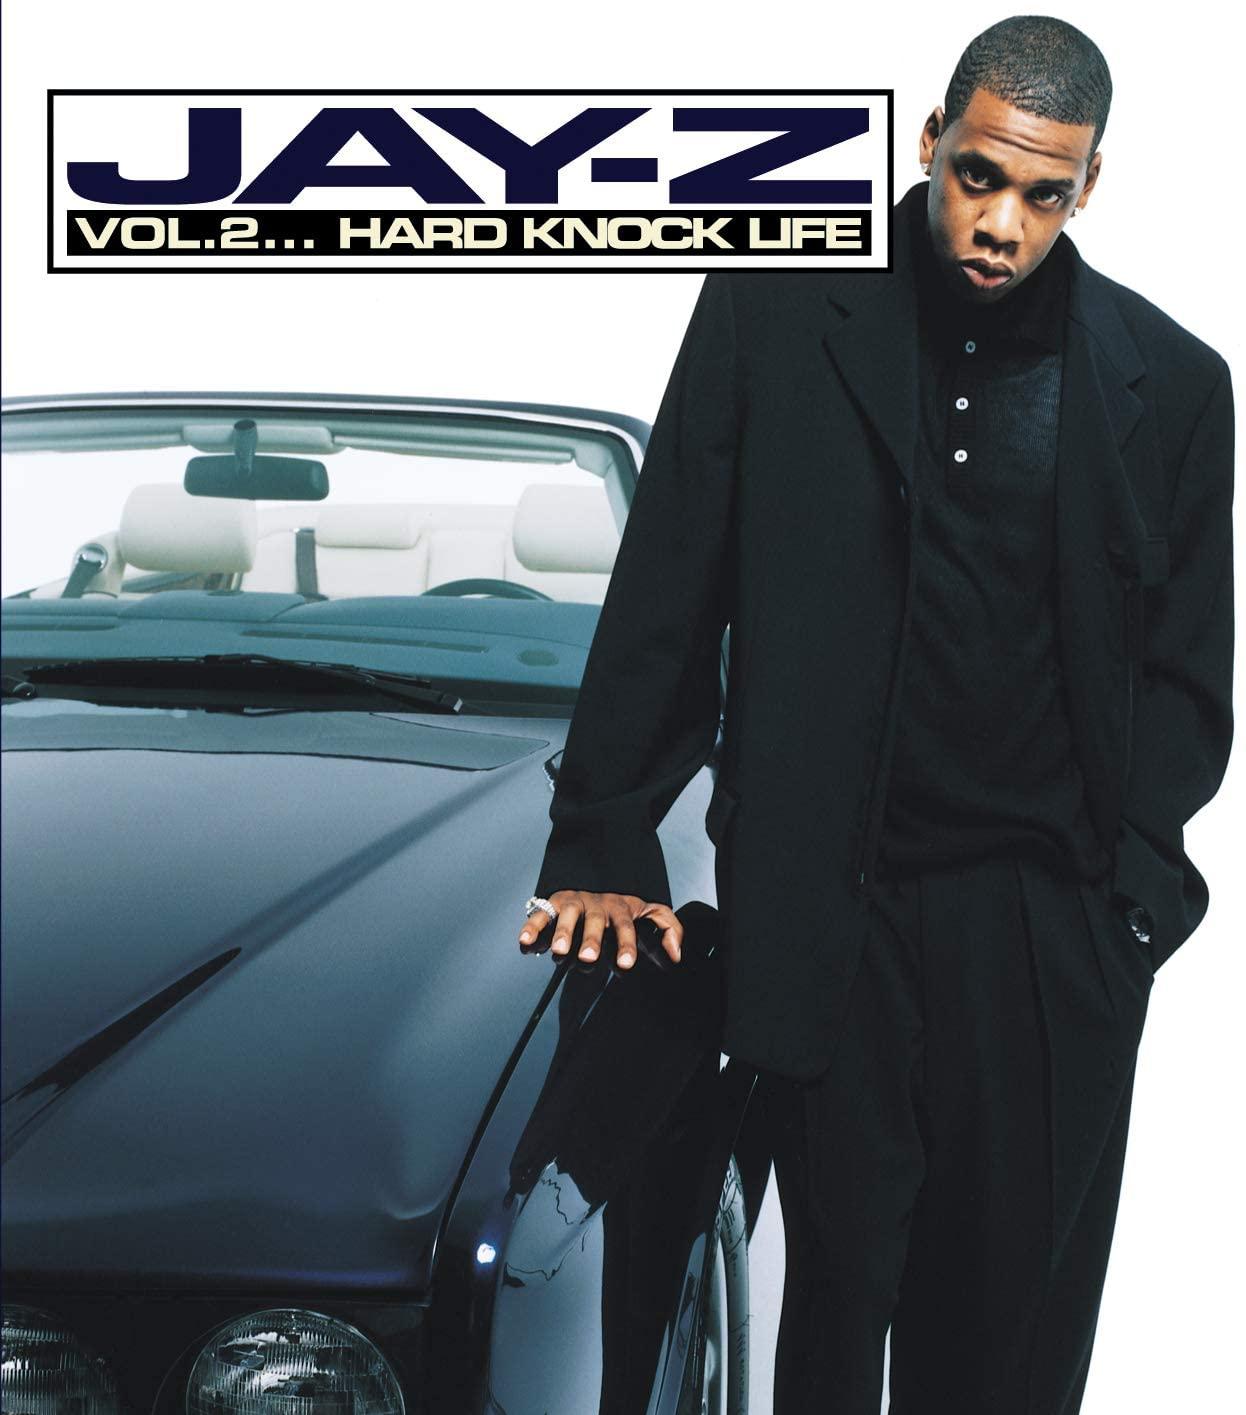 Jay-Z - Vol.2... Hard Knock Life (1998) 2LP